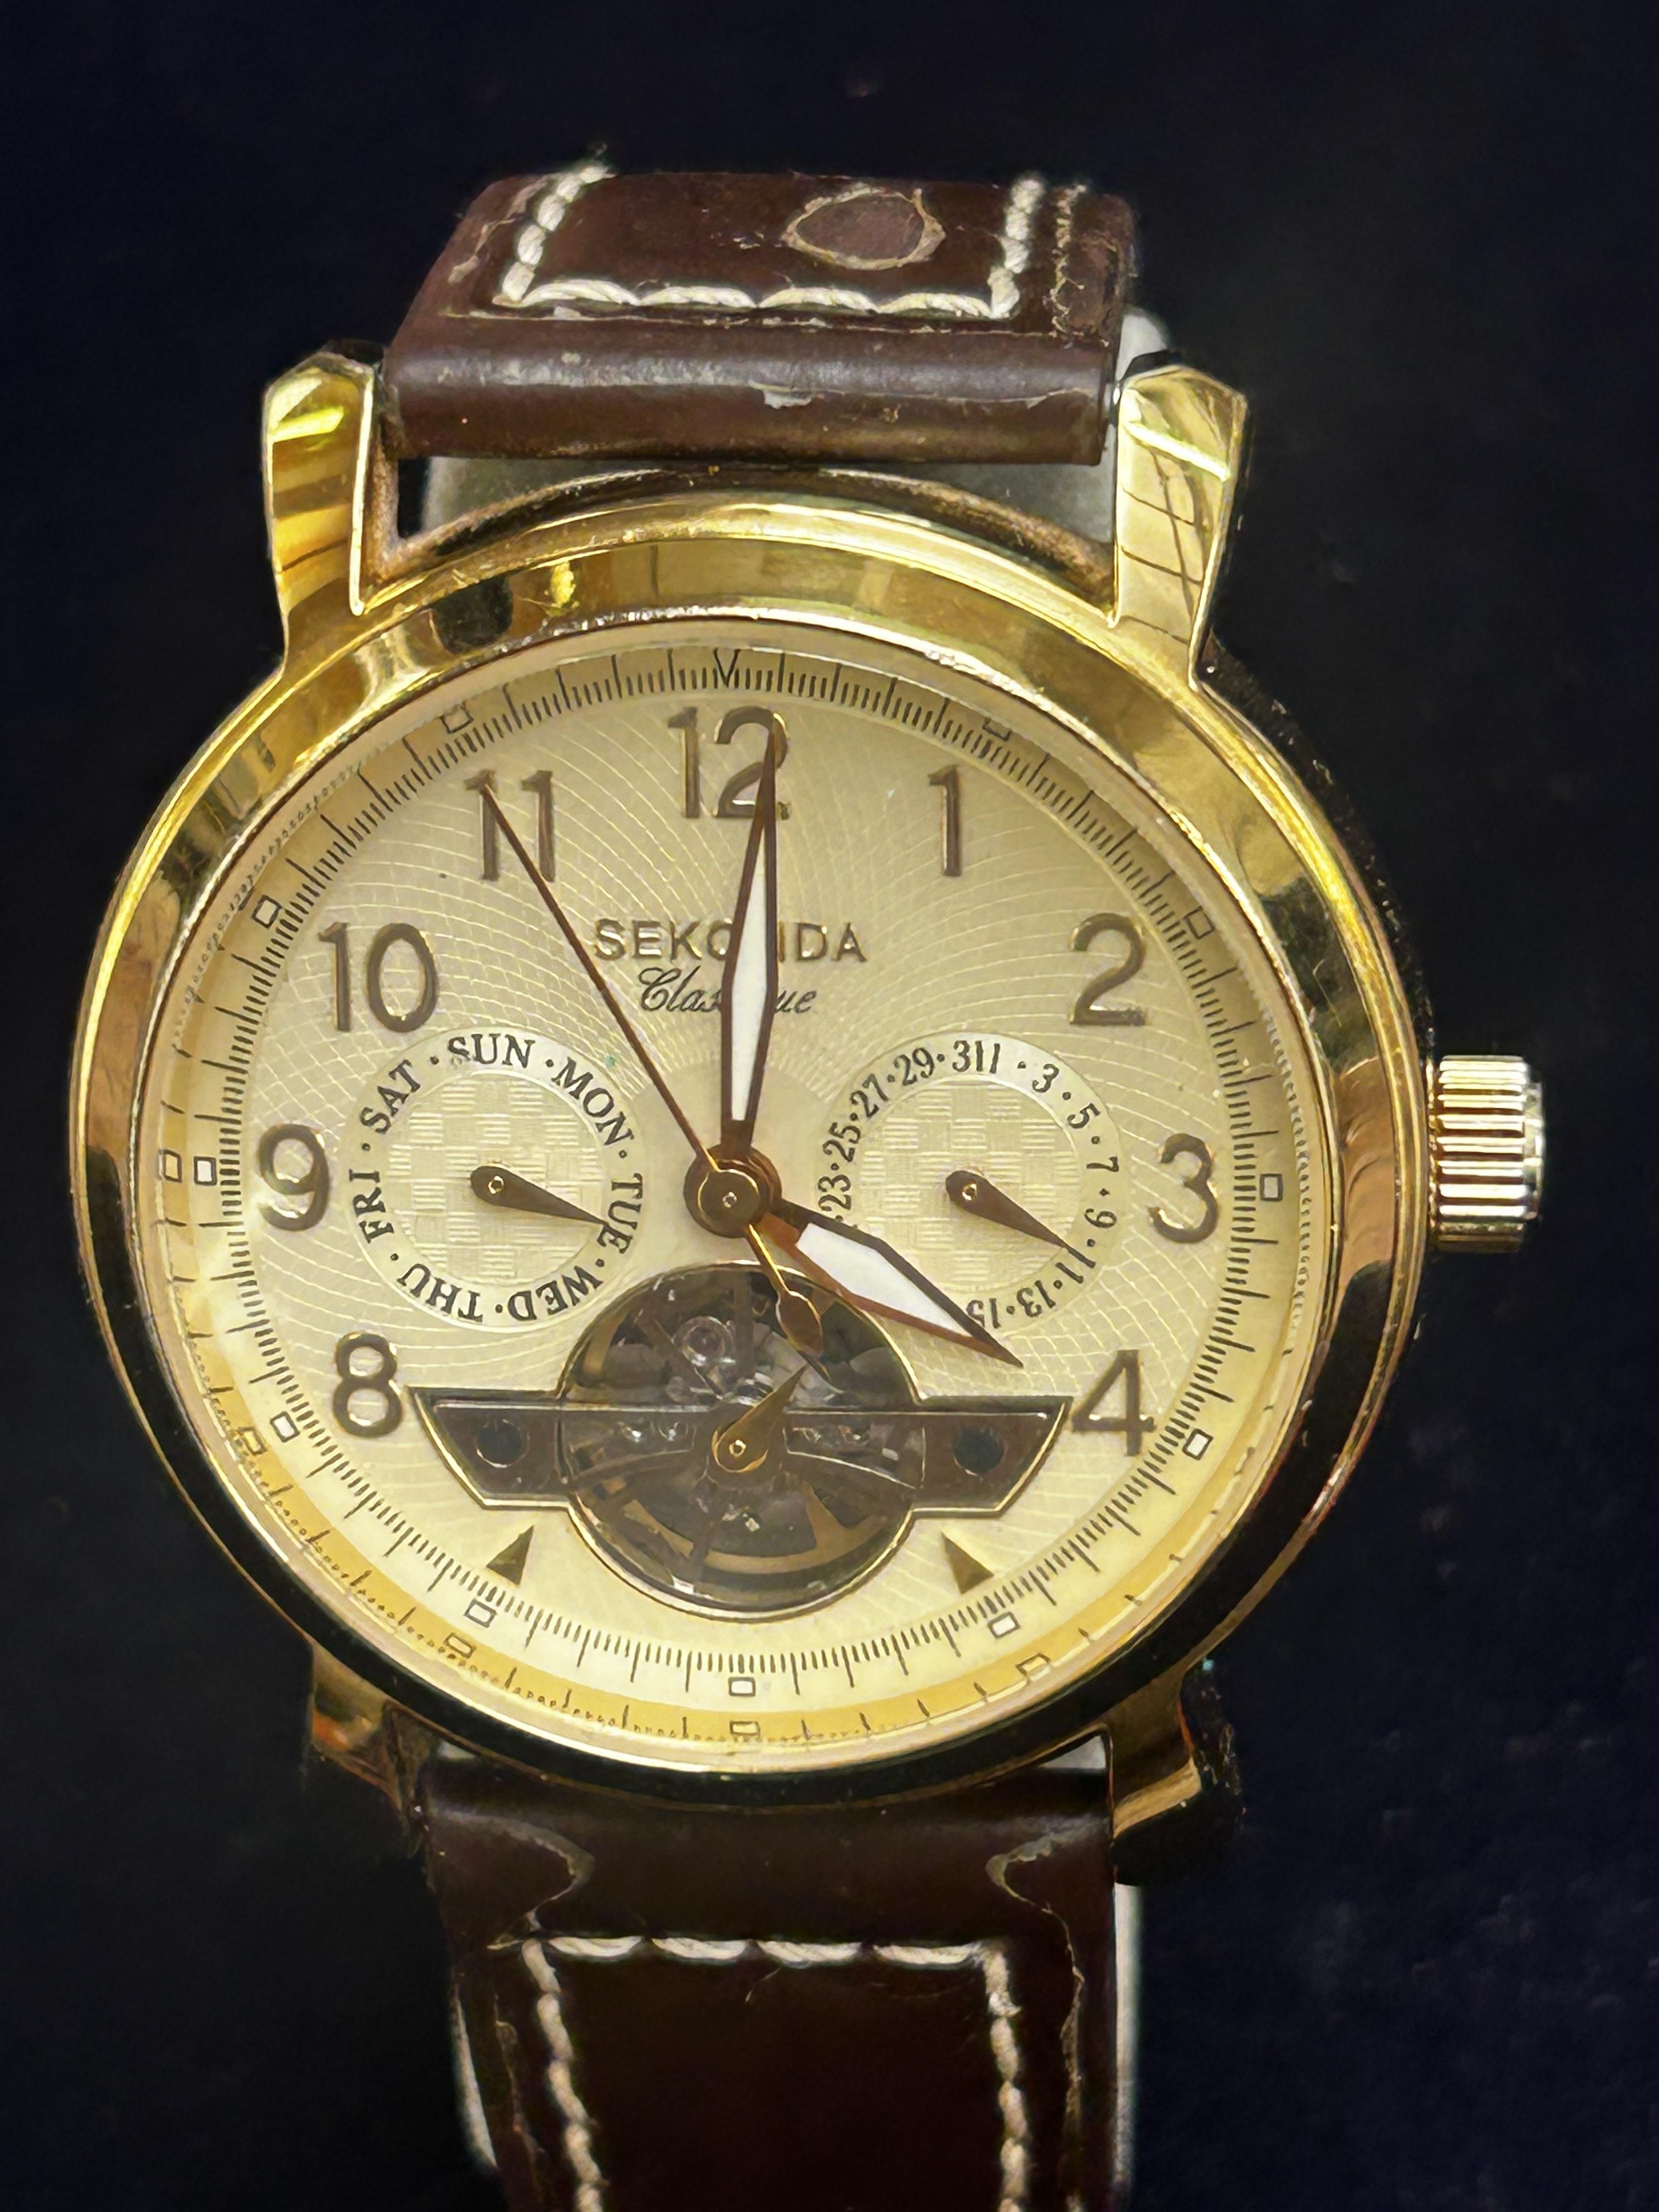 Sekonda classique day/date wristwatch